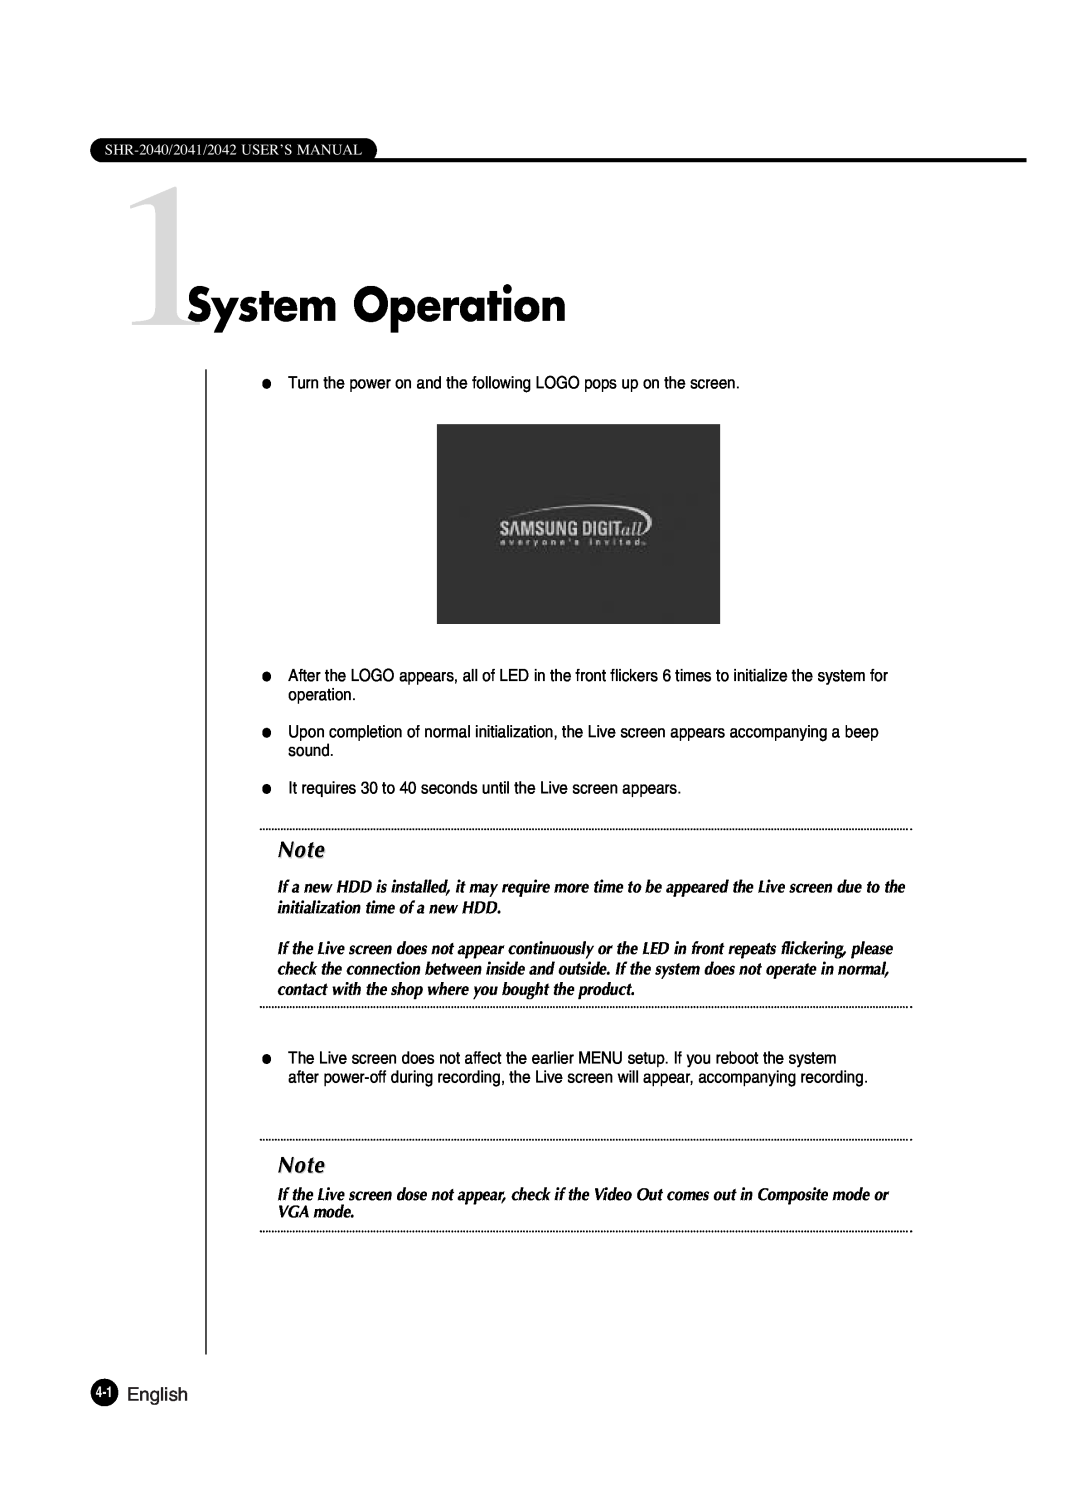 Samsung SHR-2042P250, SHR-2040P250 manual 1System Operation, English 